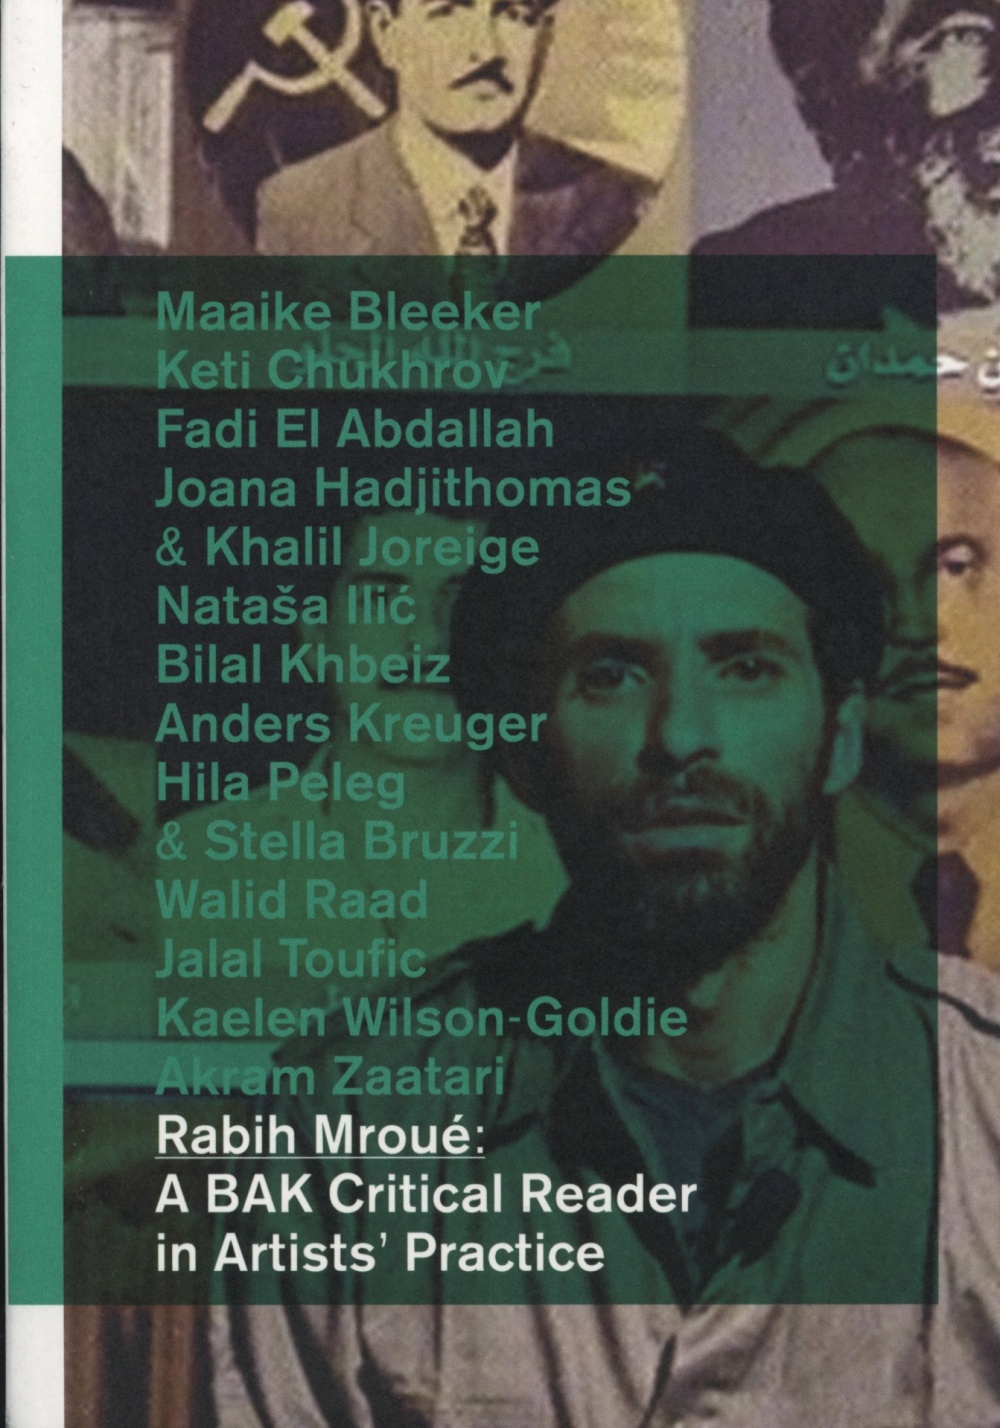 Rabih Mroué: A BAK Critical Reader in Artists’ Practice